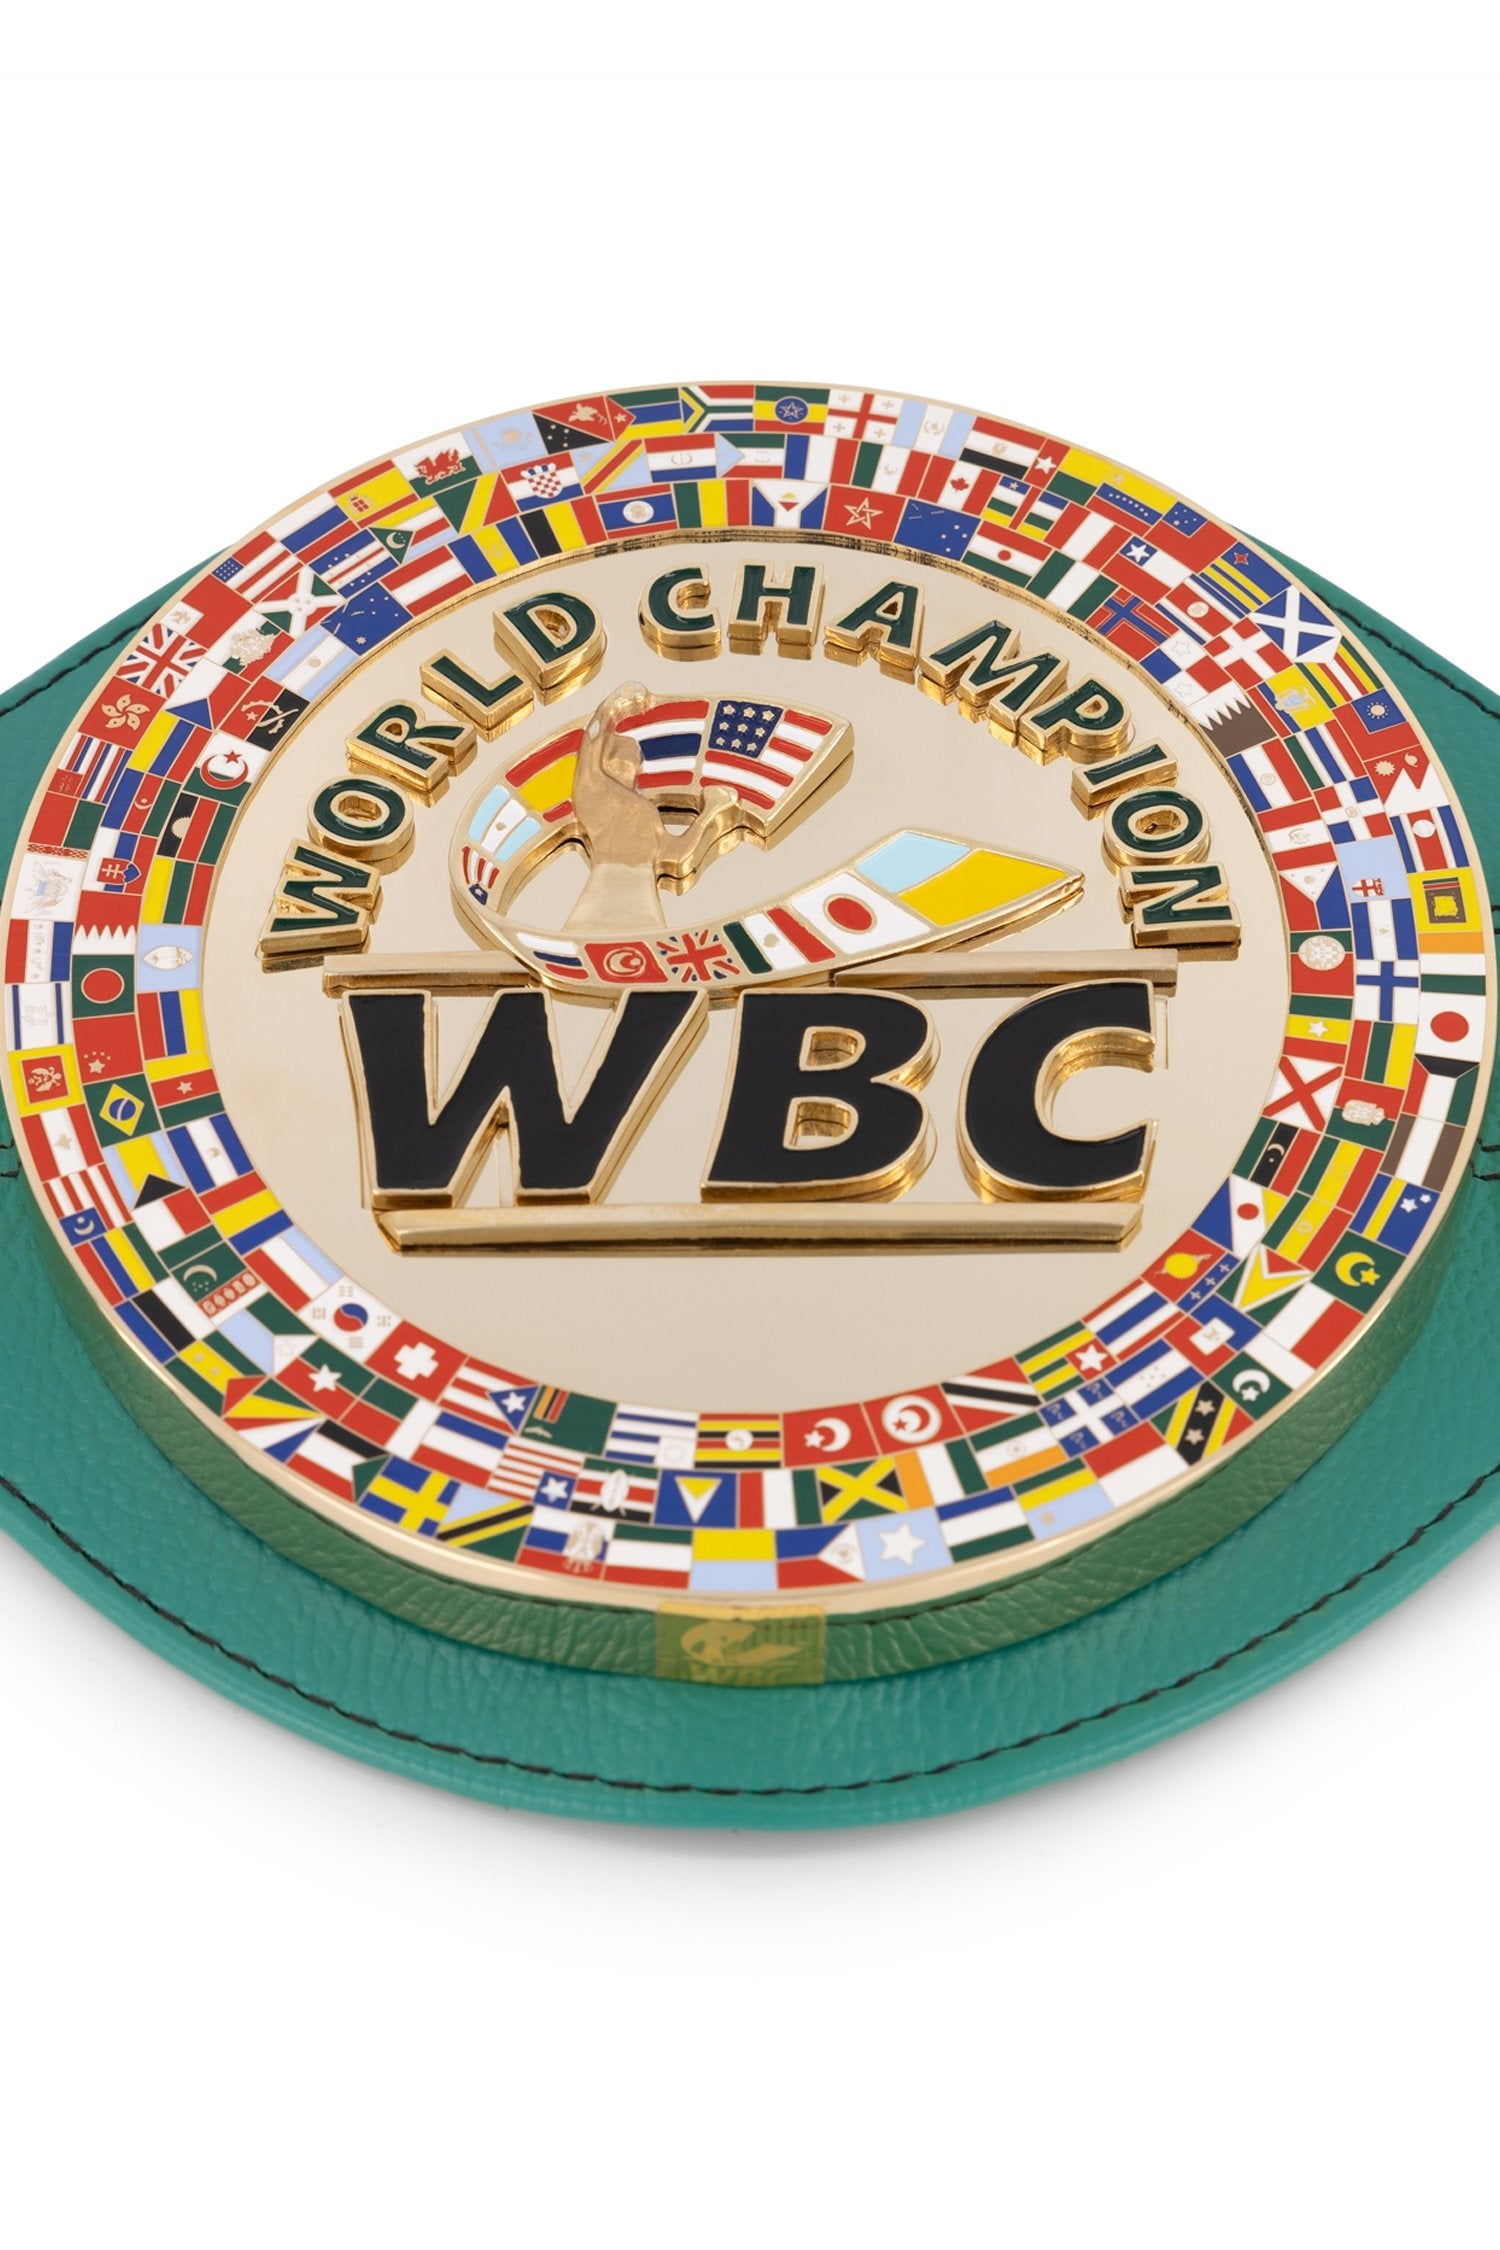 WBC Store WBC - Championship Belt "In Honor to Muhammad Ali Collection" Muhammad Ali vs. Leon Spinks II